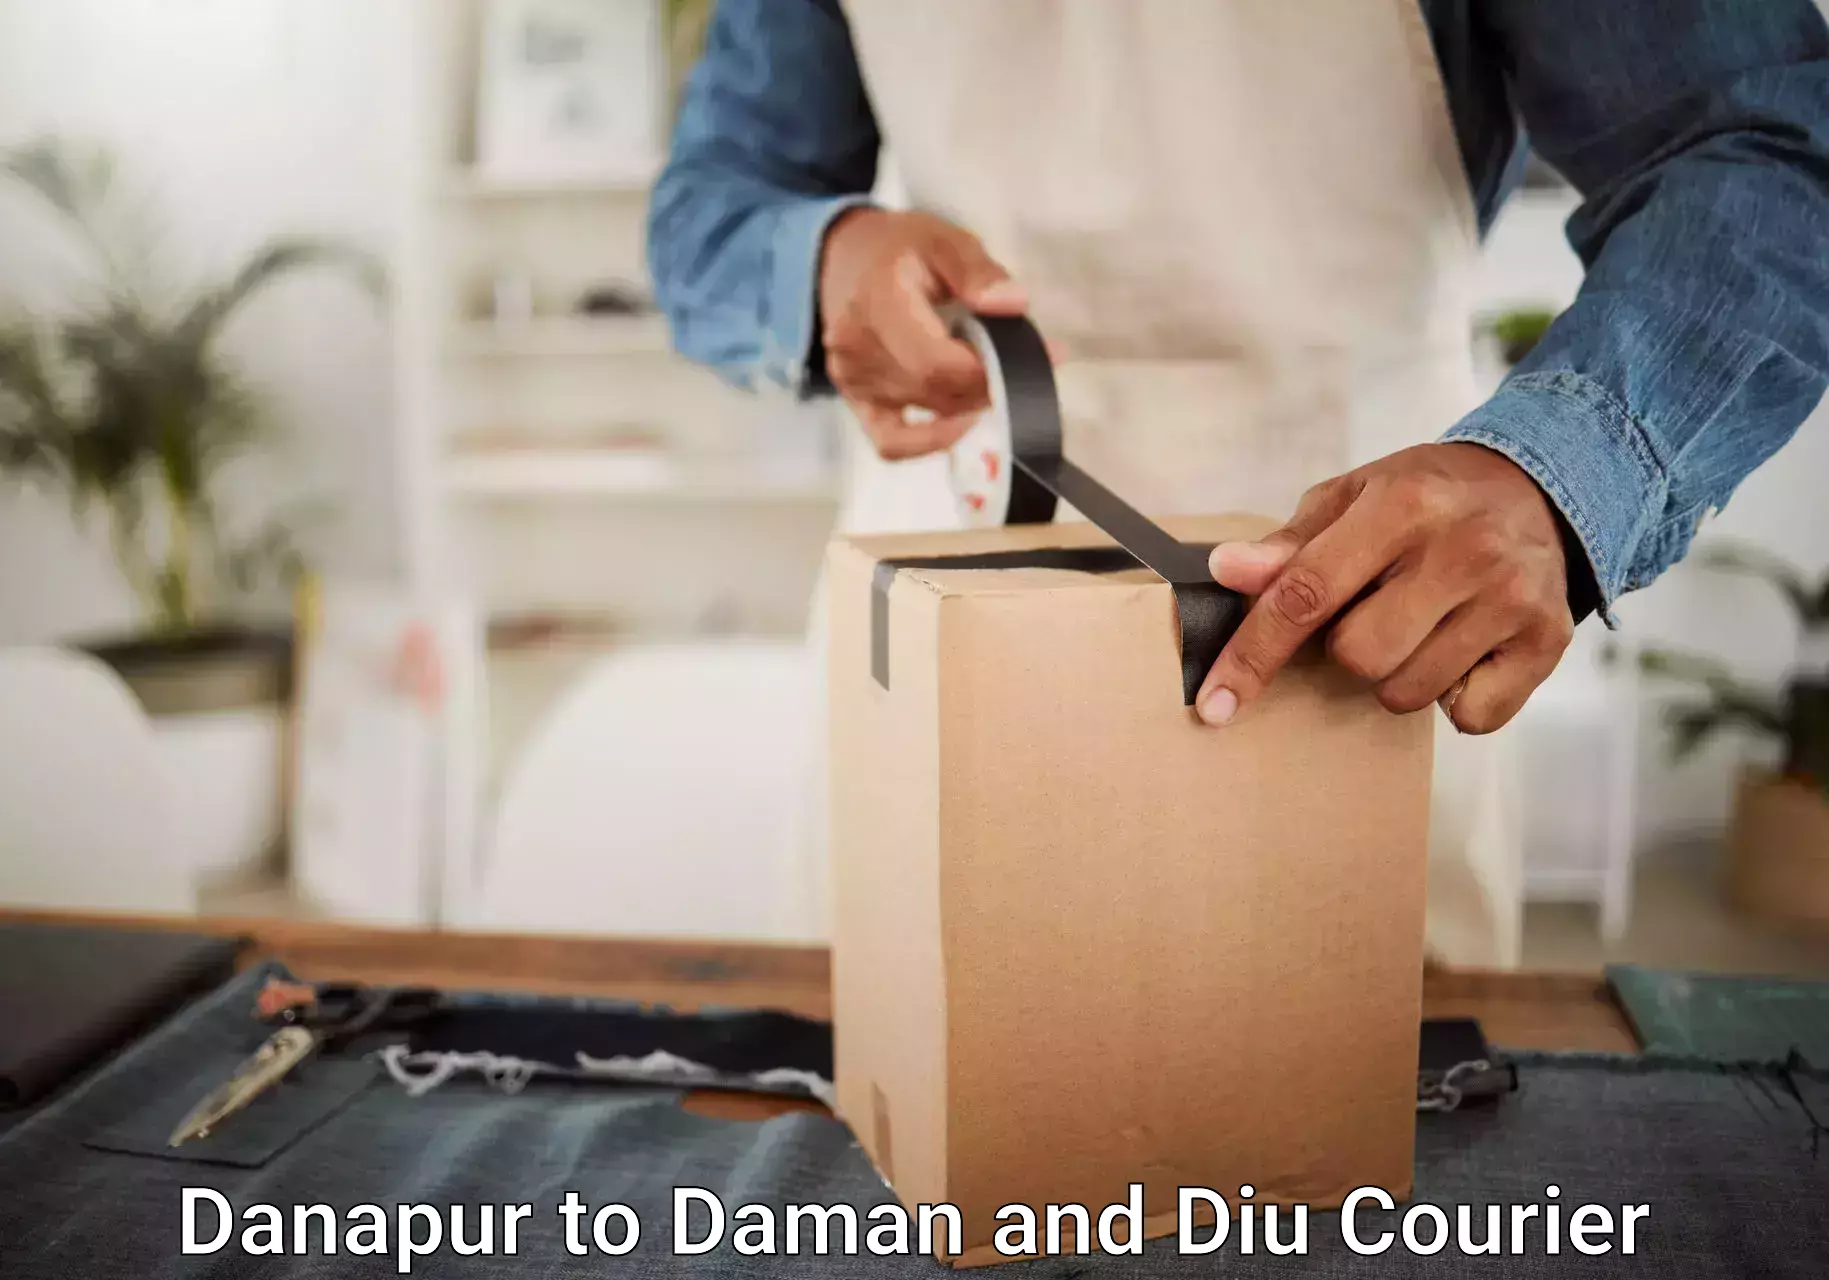 Luggage delivery app Danapur to Daman